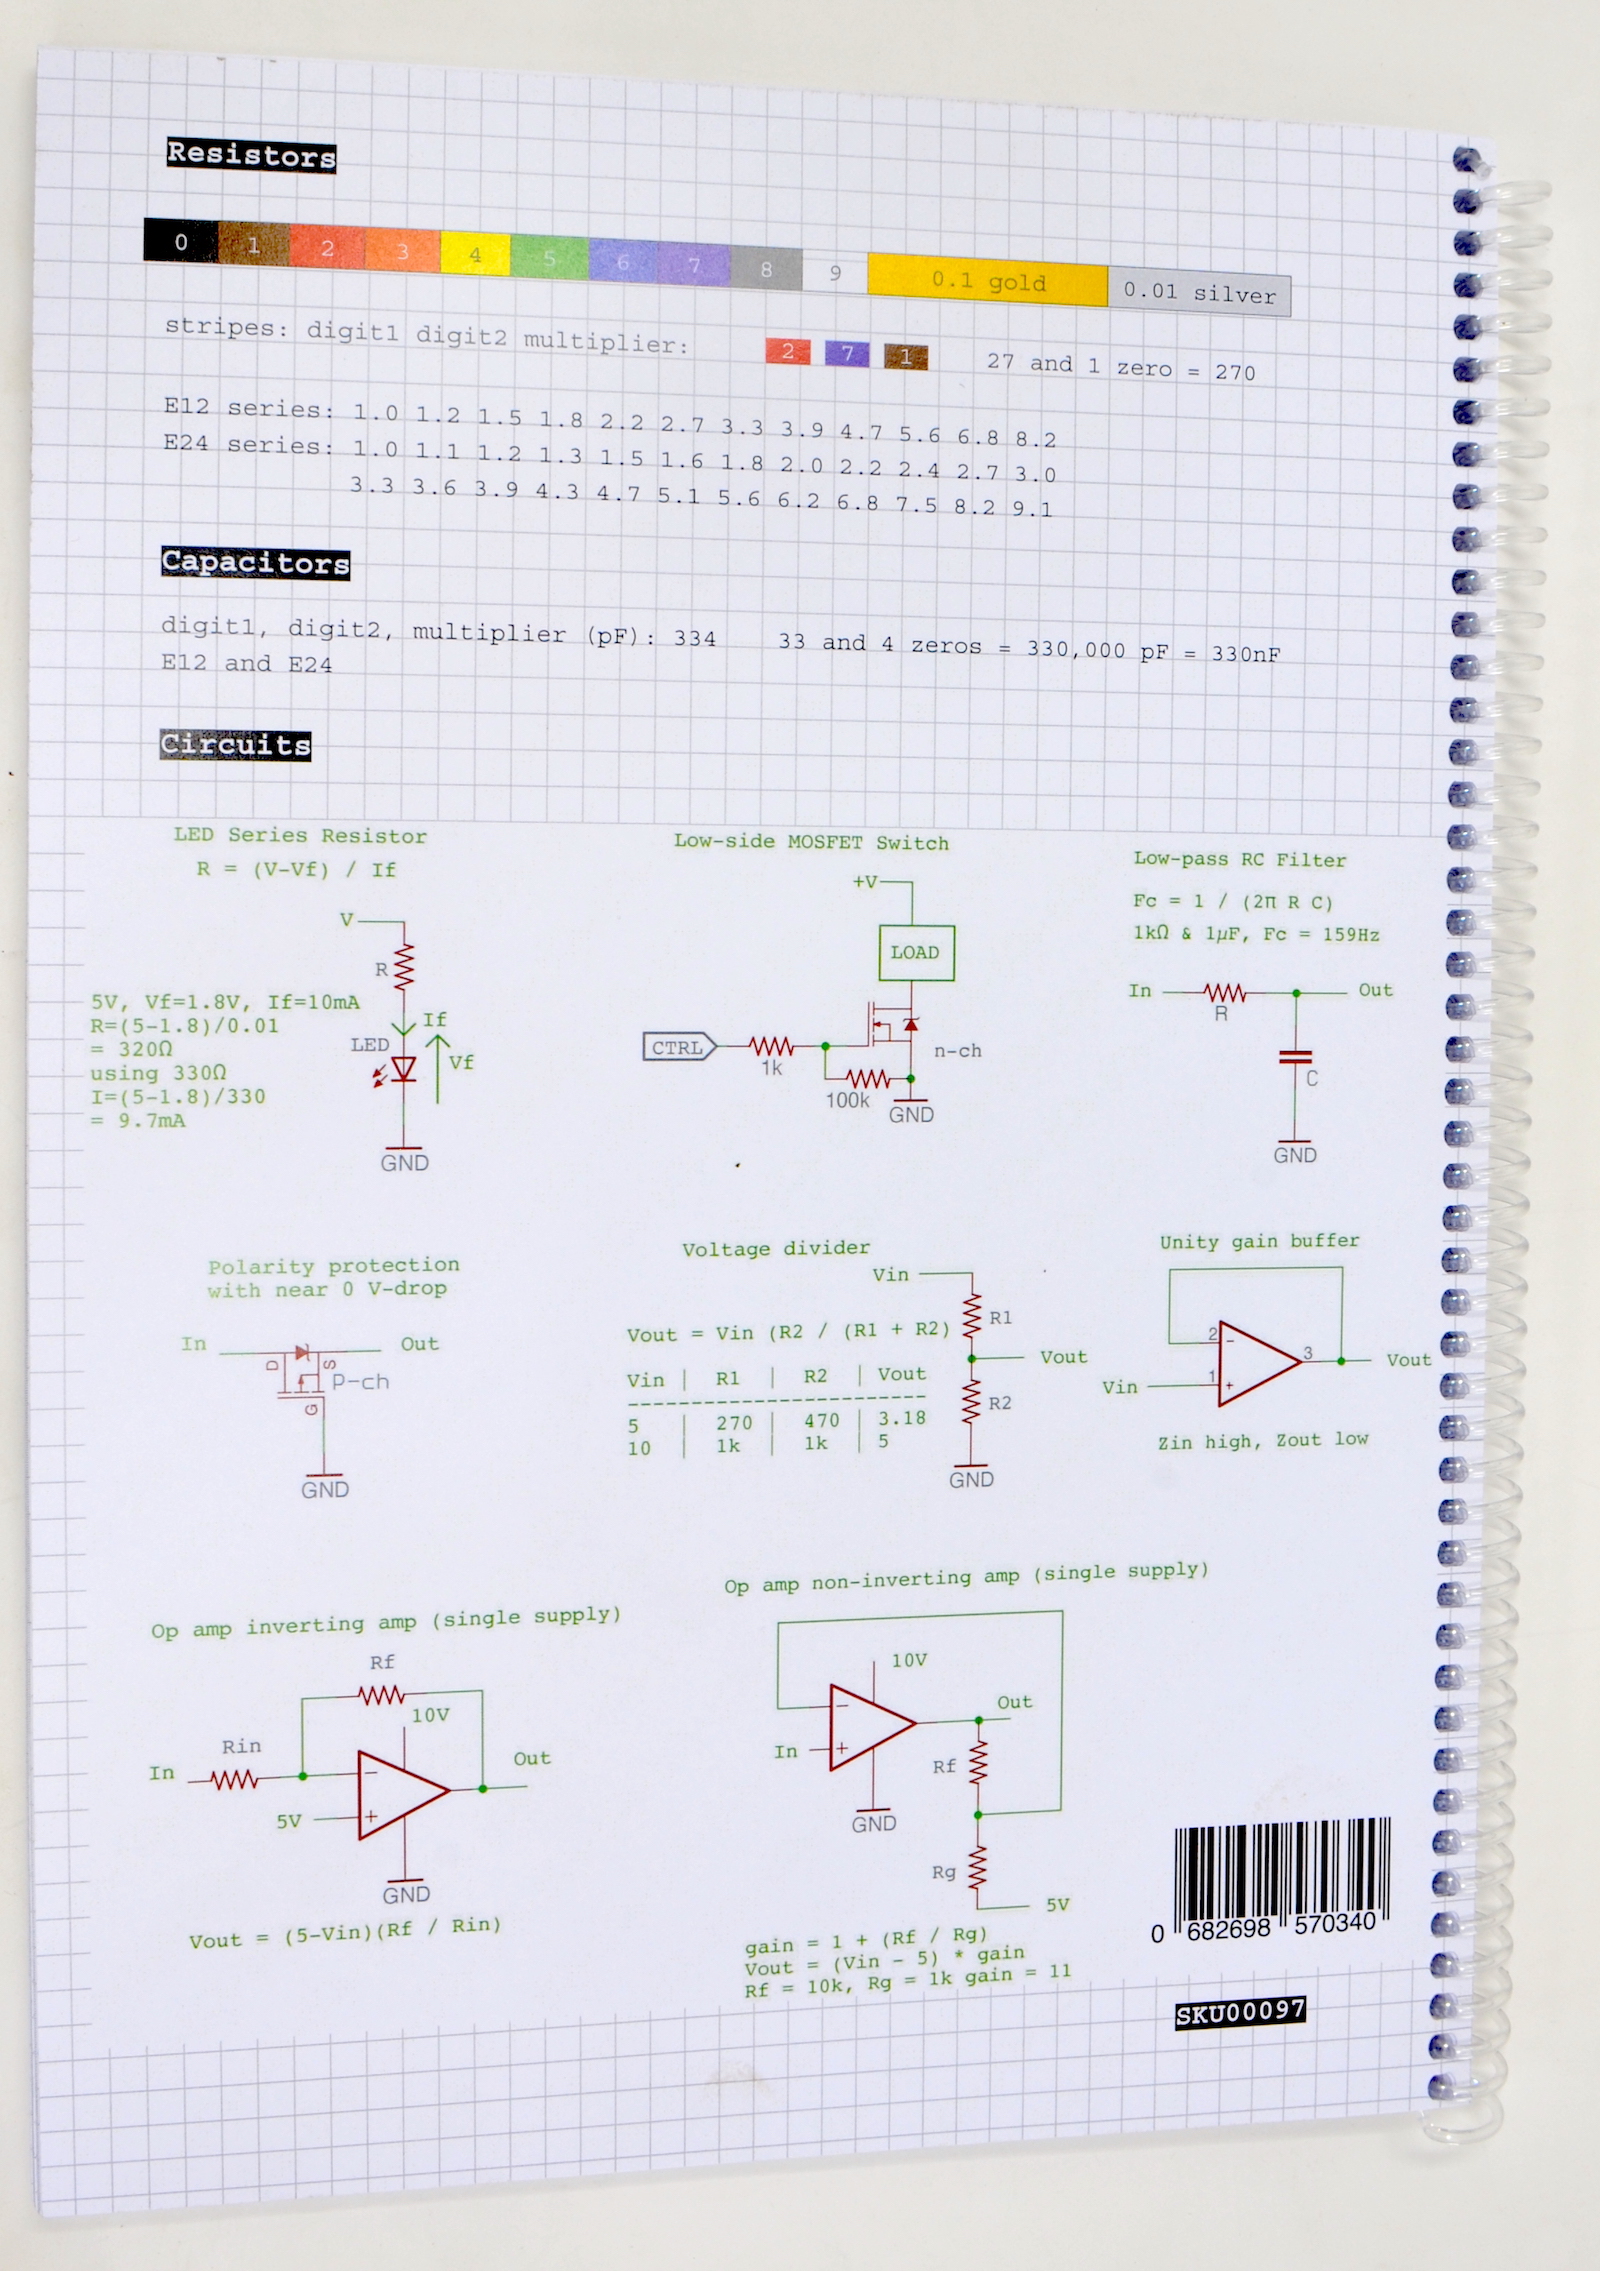 Electronics Notebook